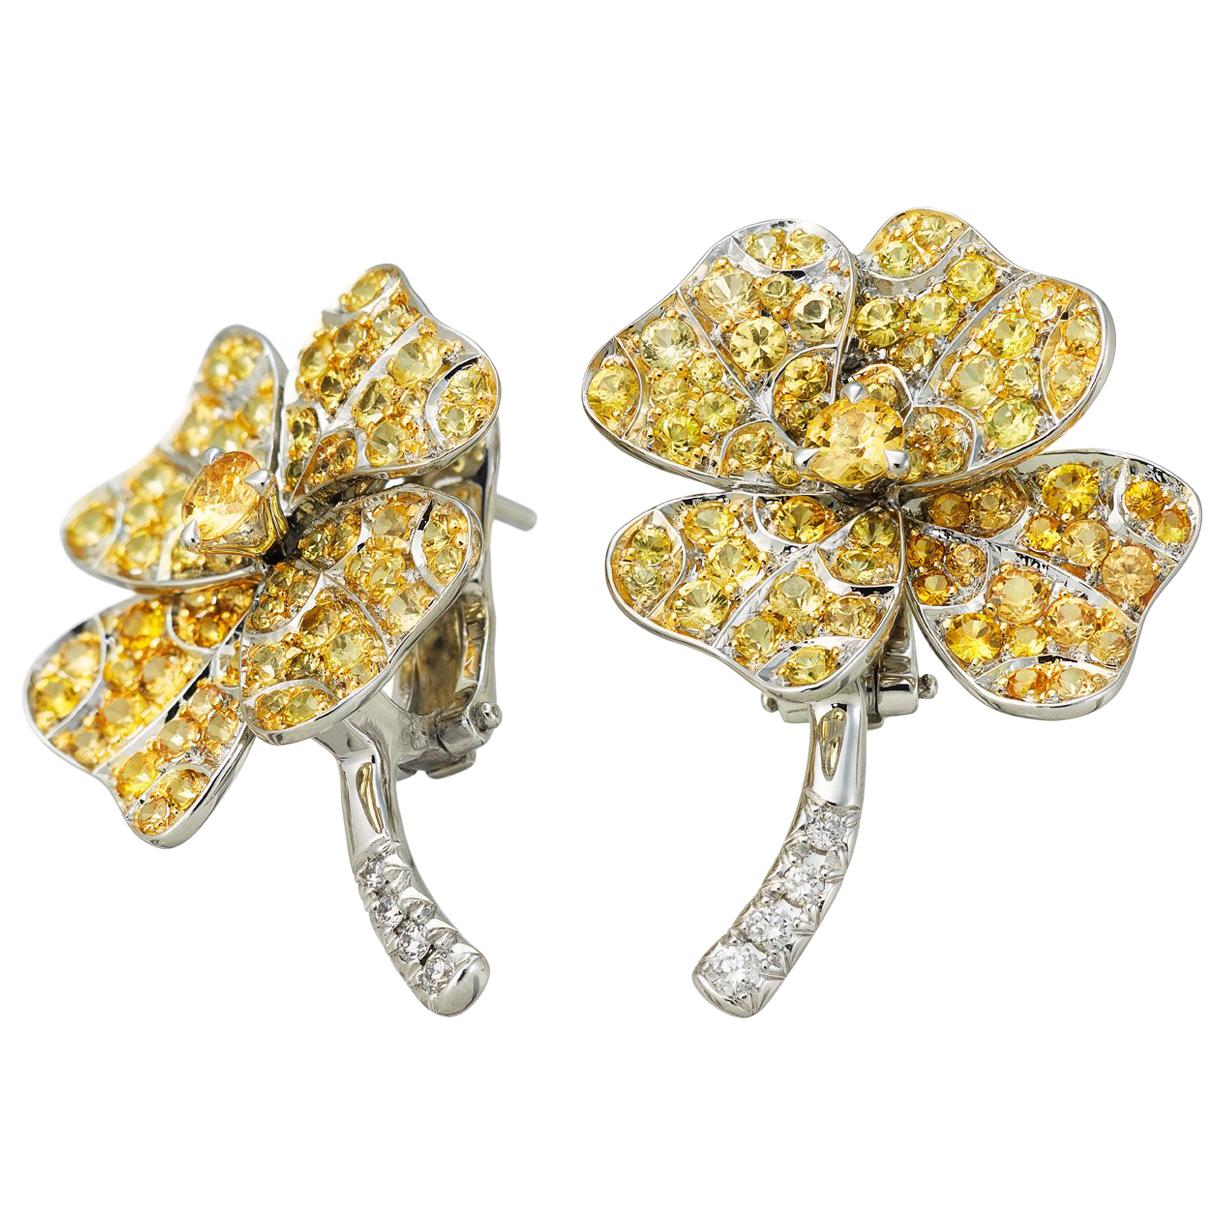 AENEA Palladium White Gold (18k) White Diamonds and Yellow Sapphire Earrings For Sale